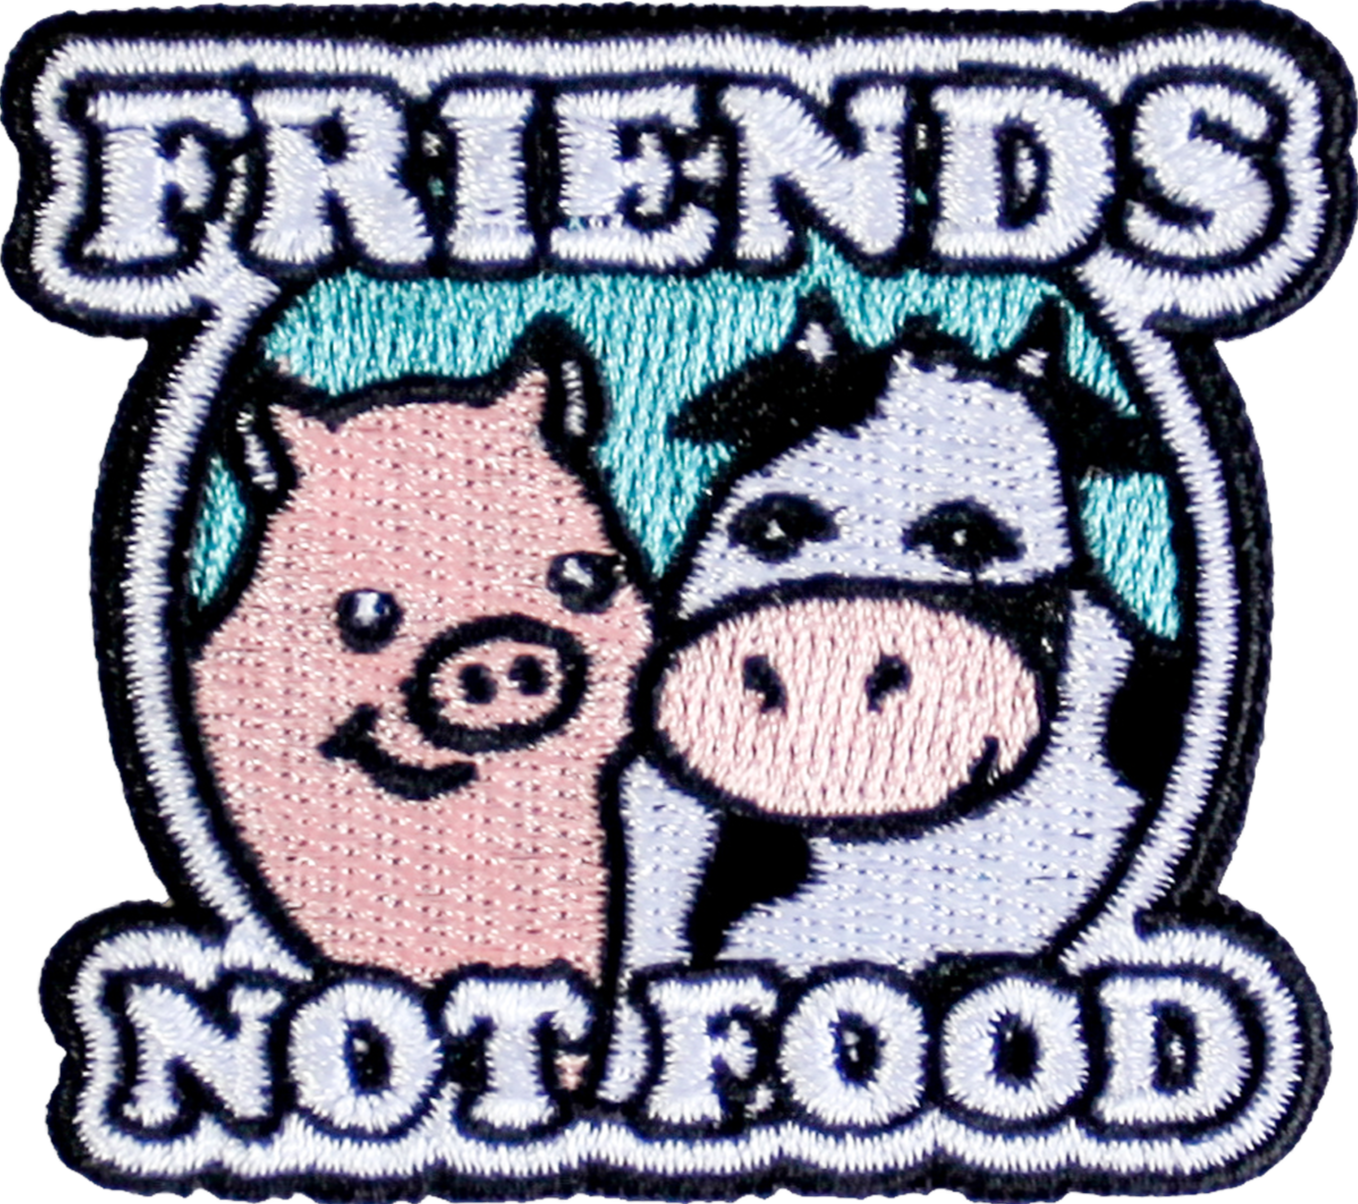 Friends not Food